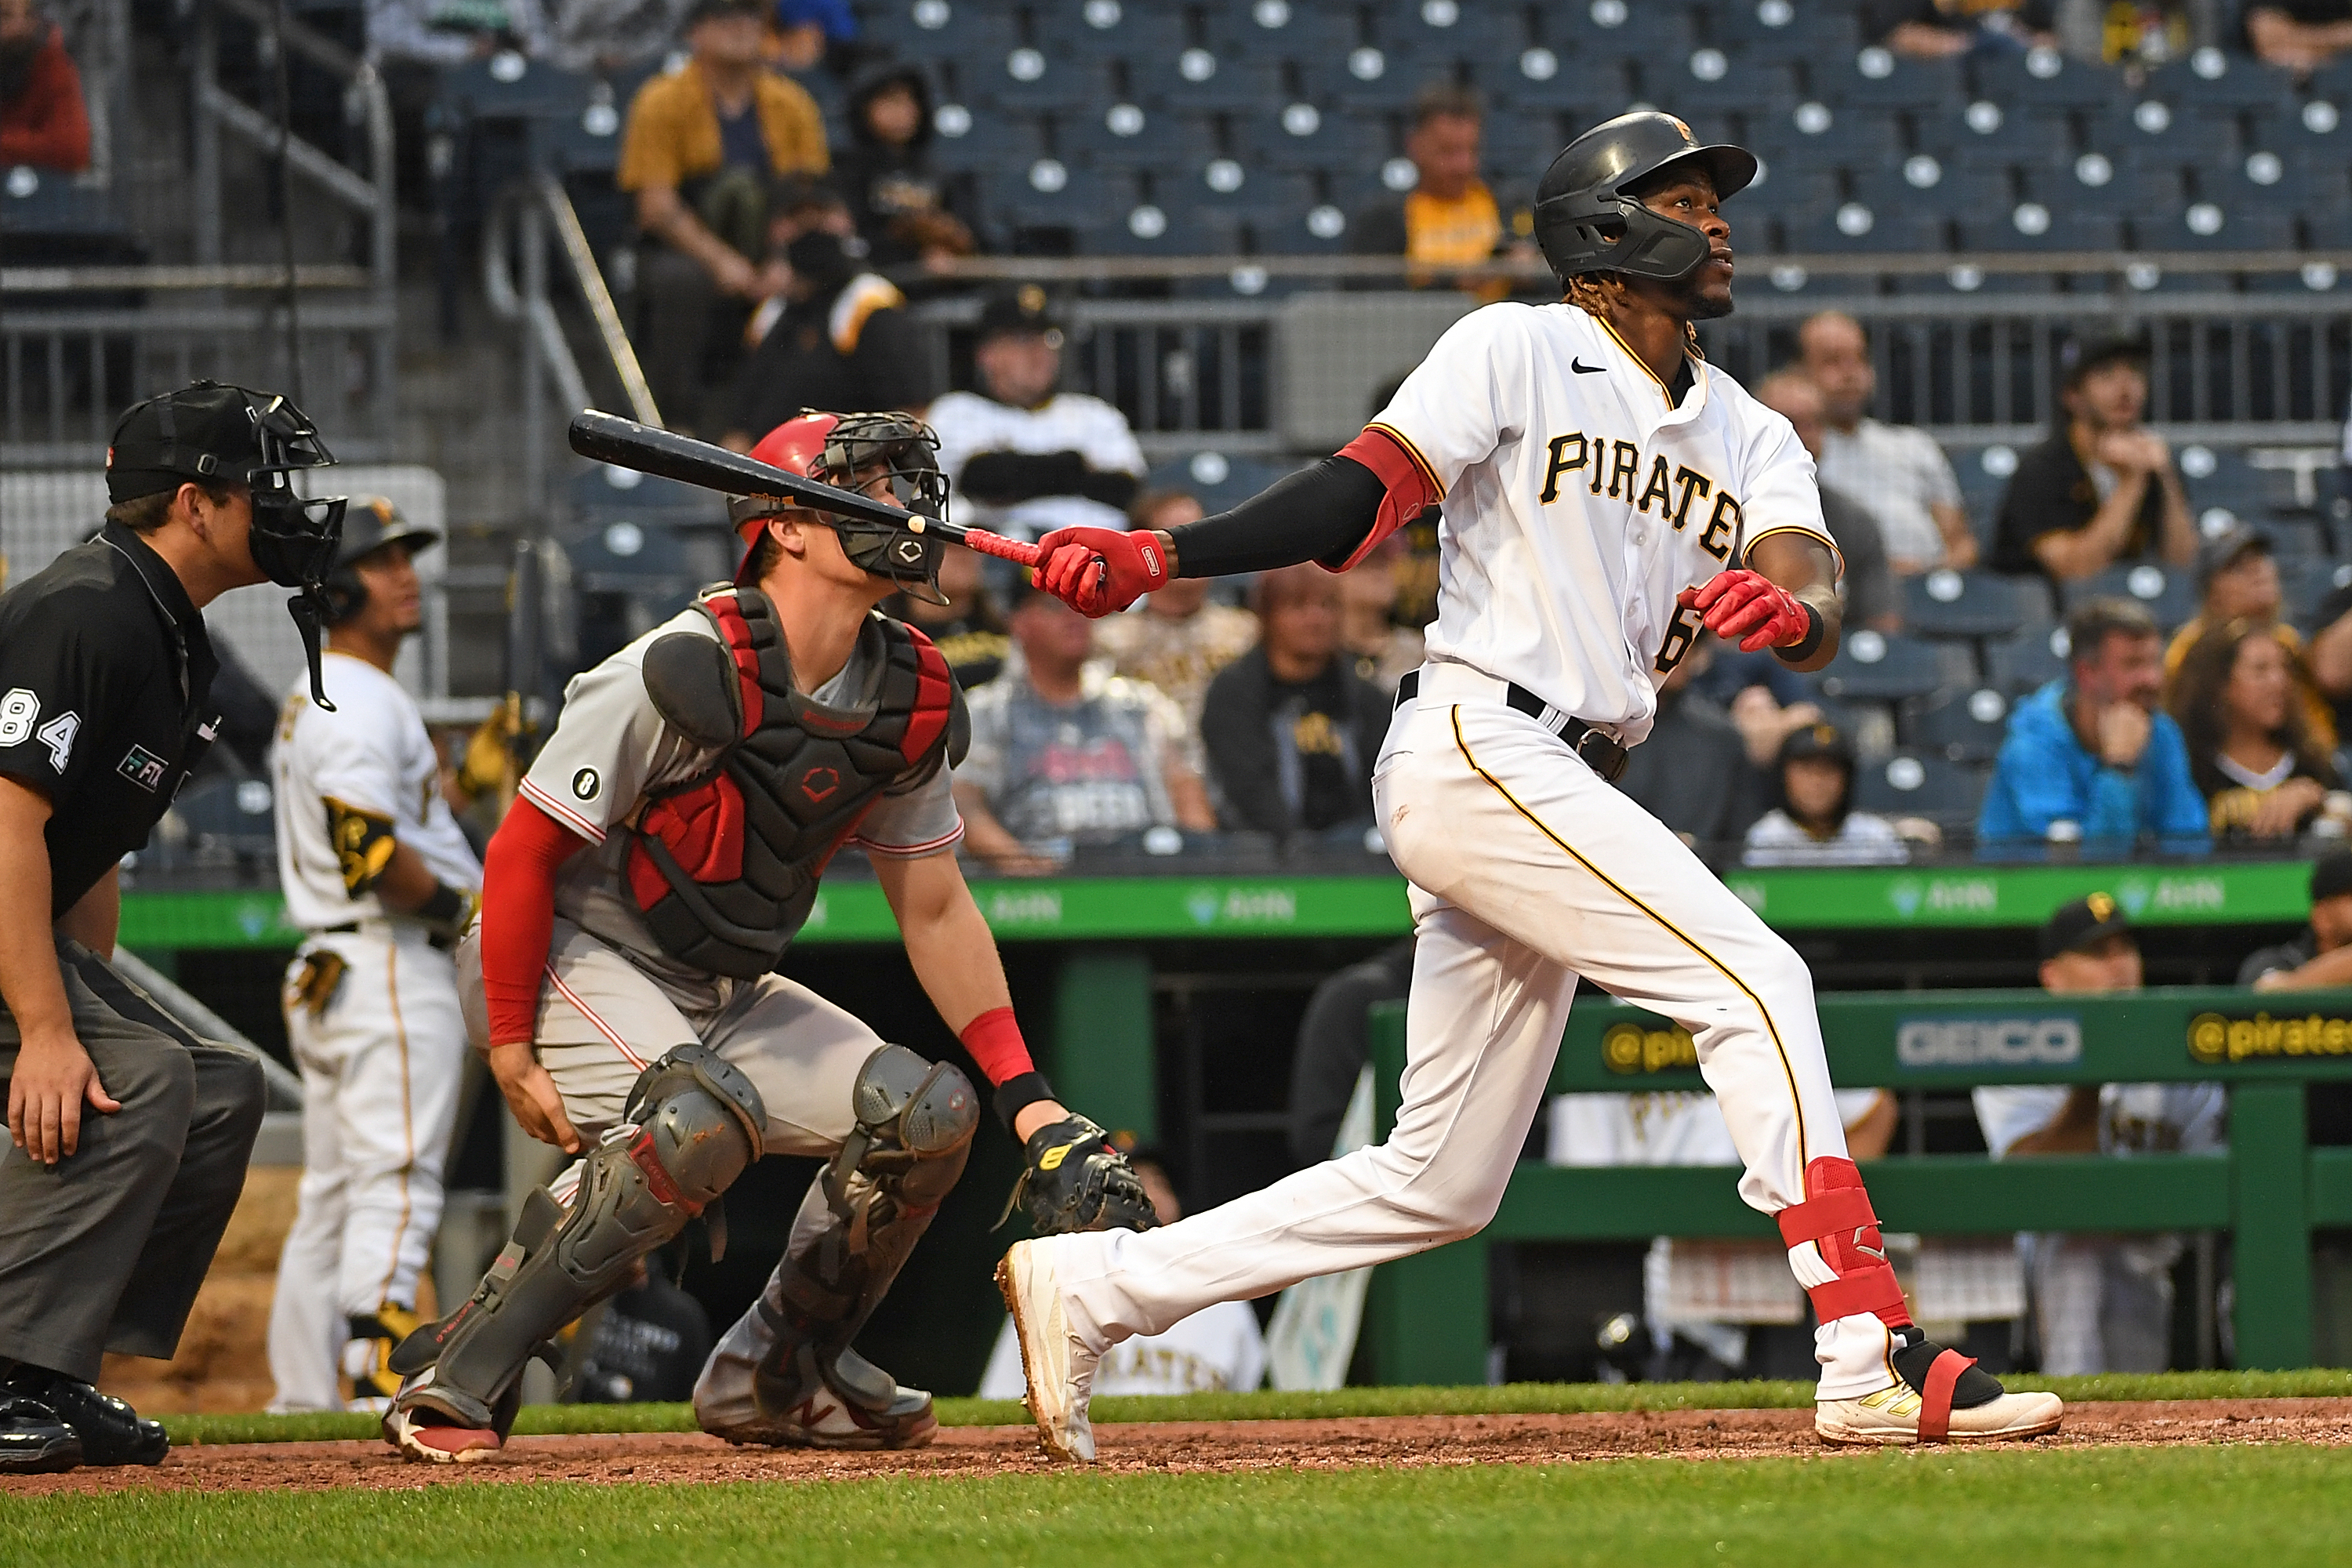 Baseball has never seen anyone like Pirates shortstop Oneil Cruz - The  Boston Globe